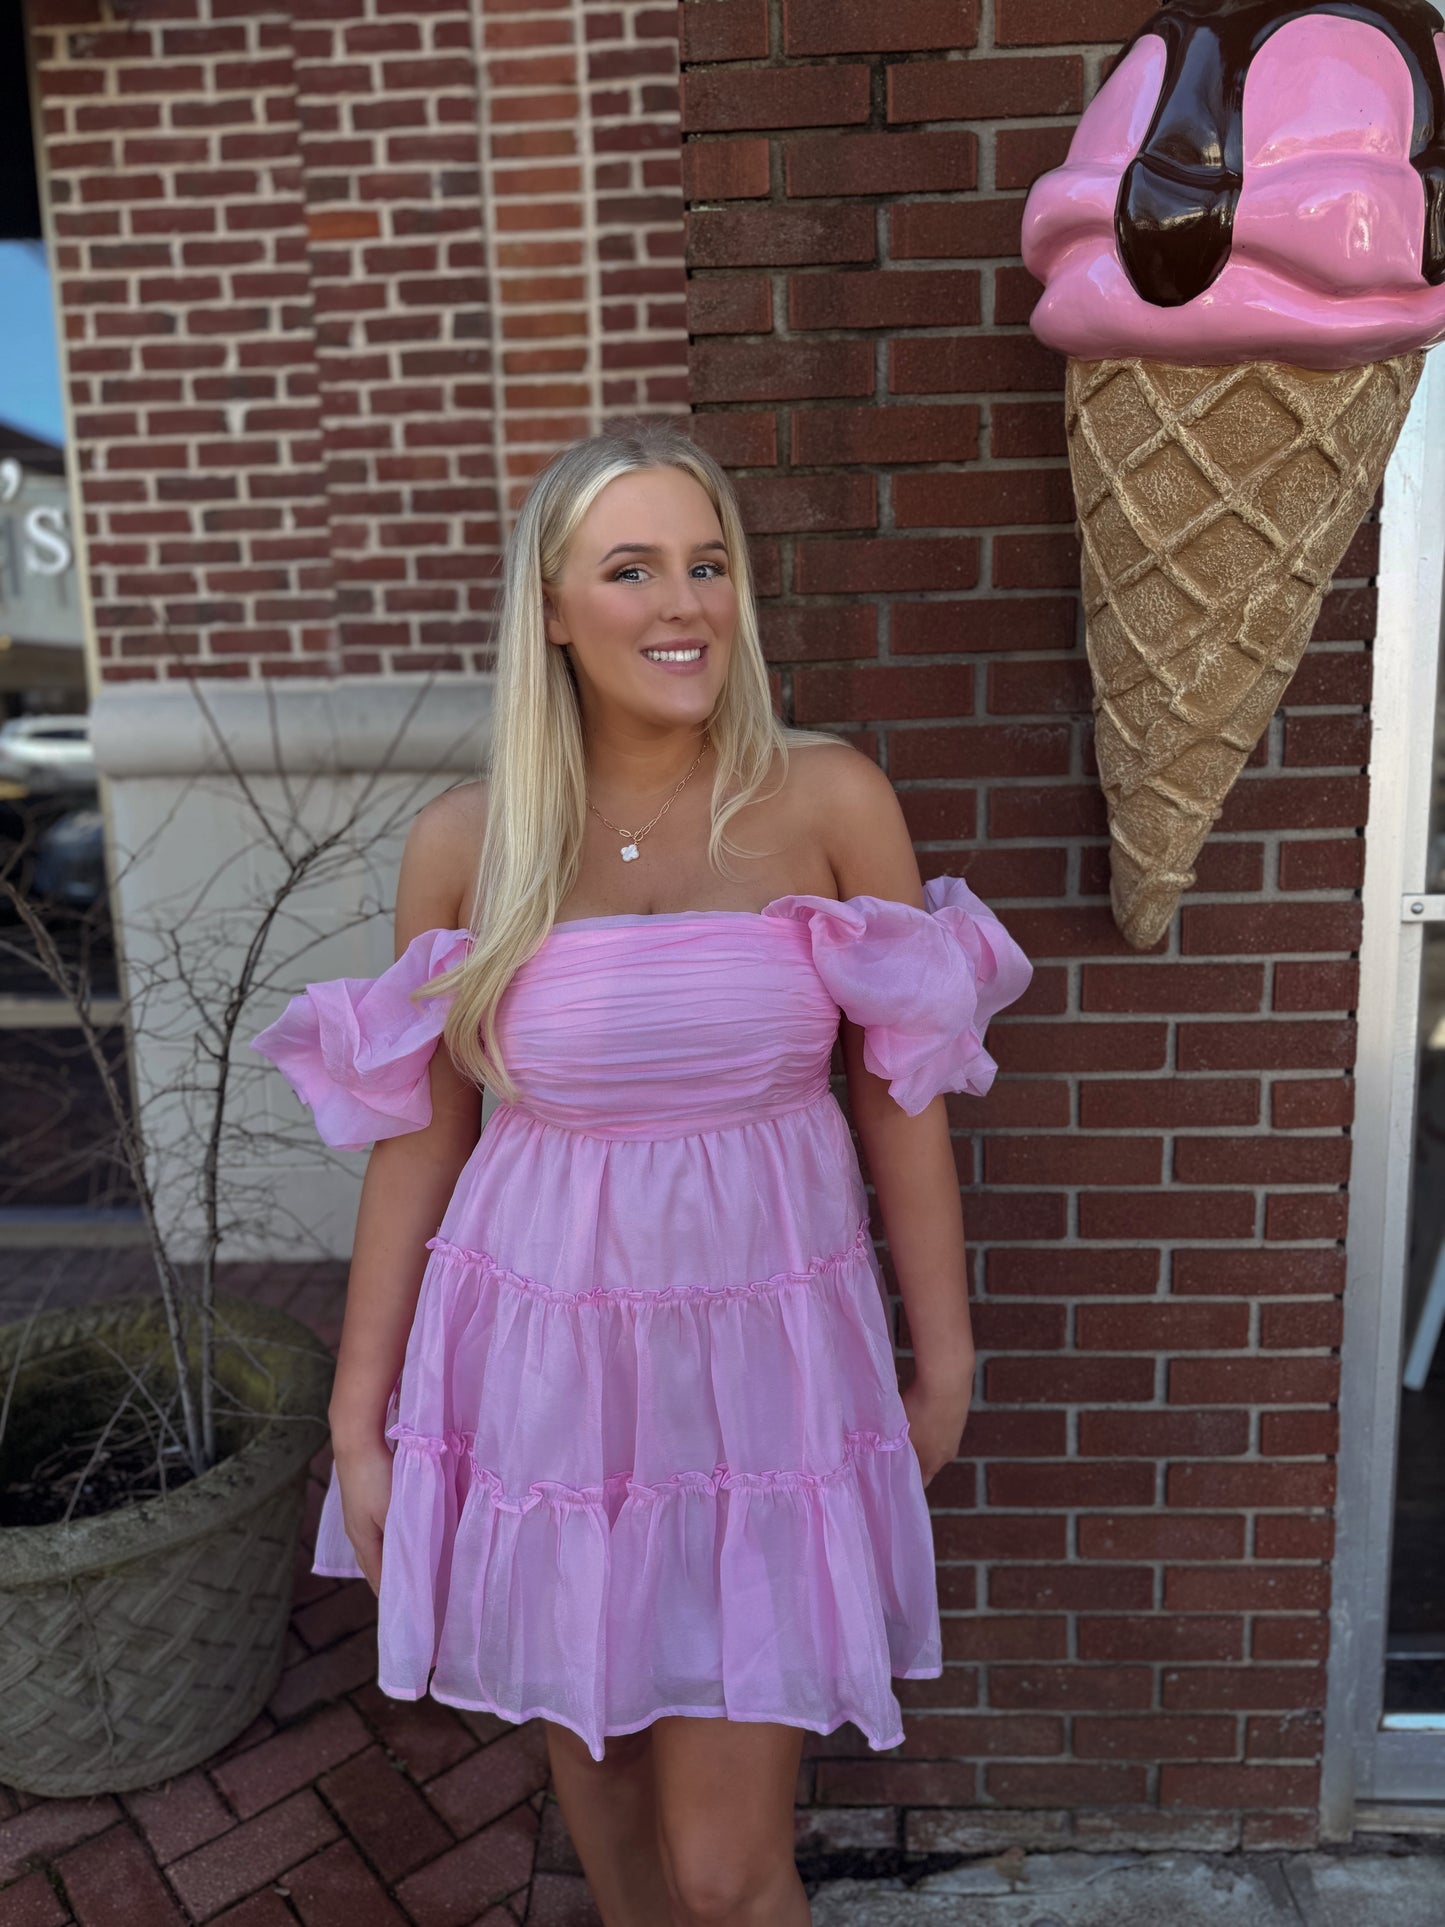 Palmer Ruffled Babydoll Dress in Pink